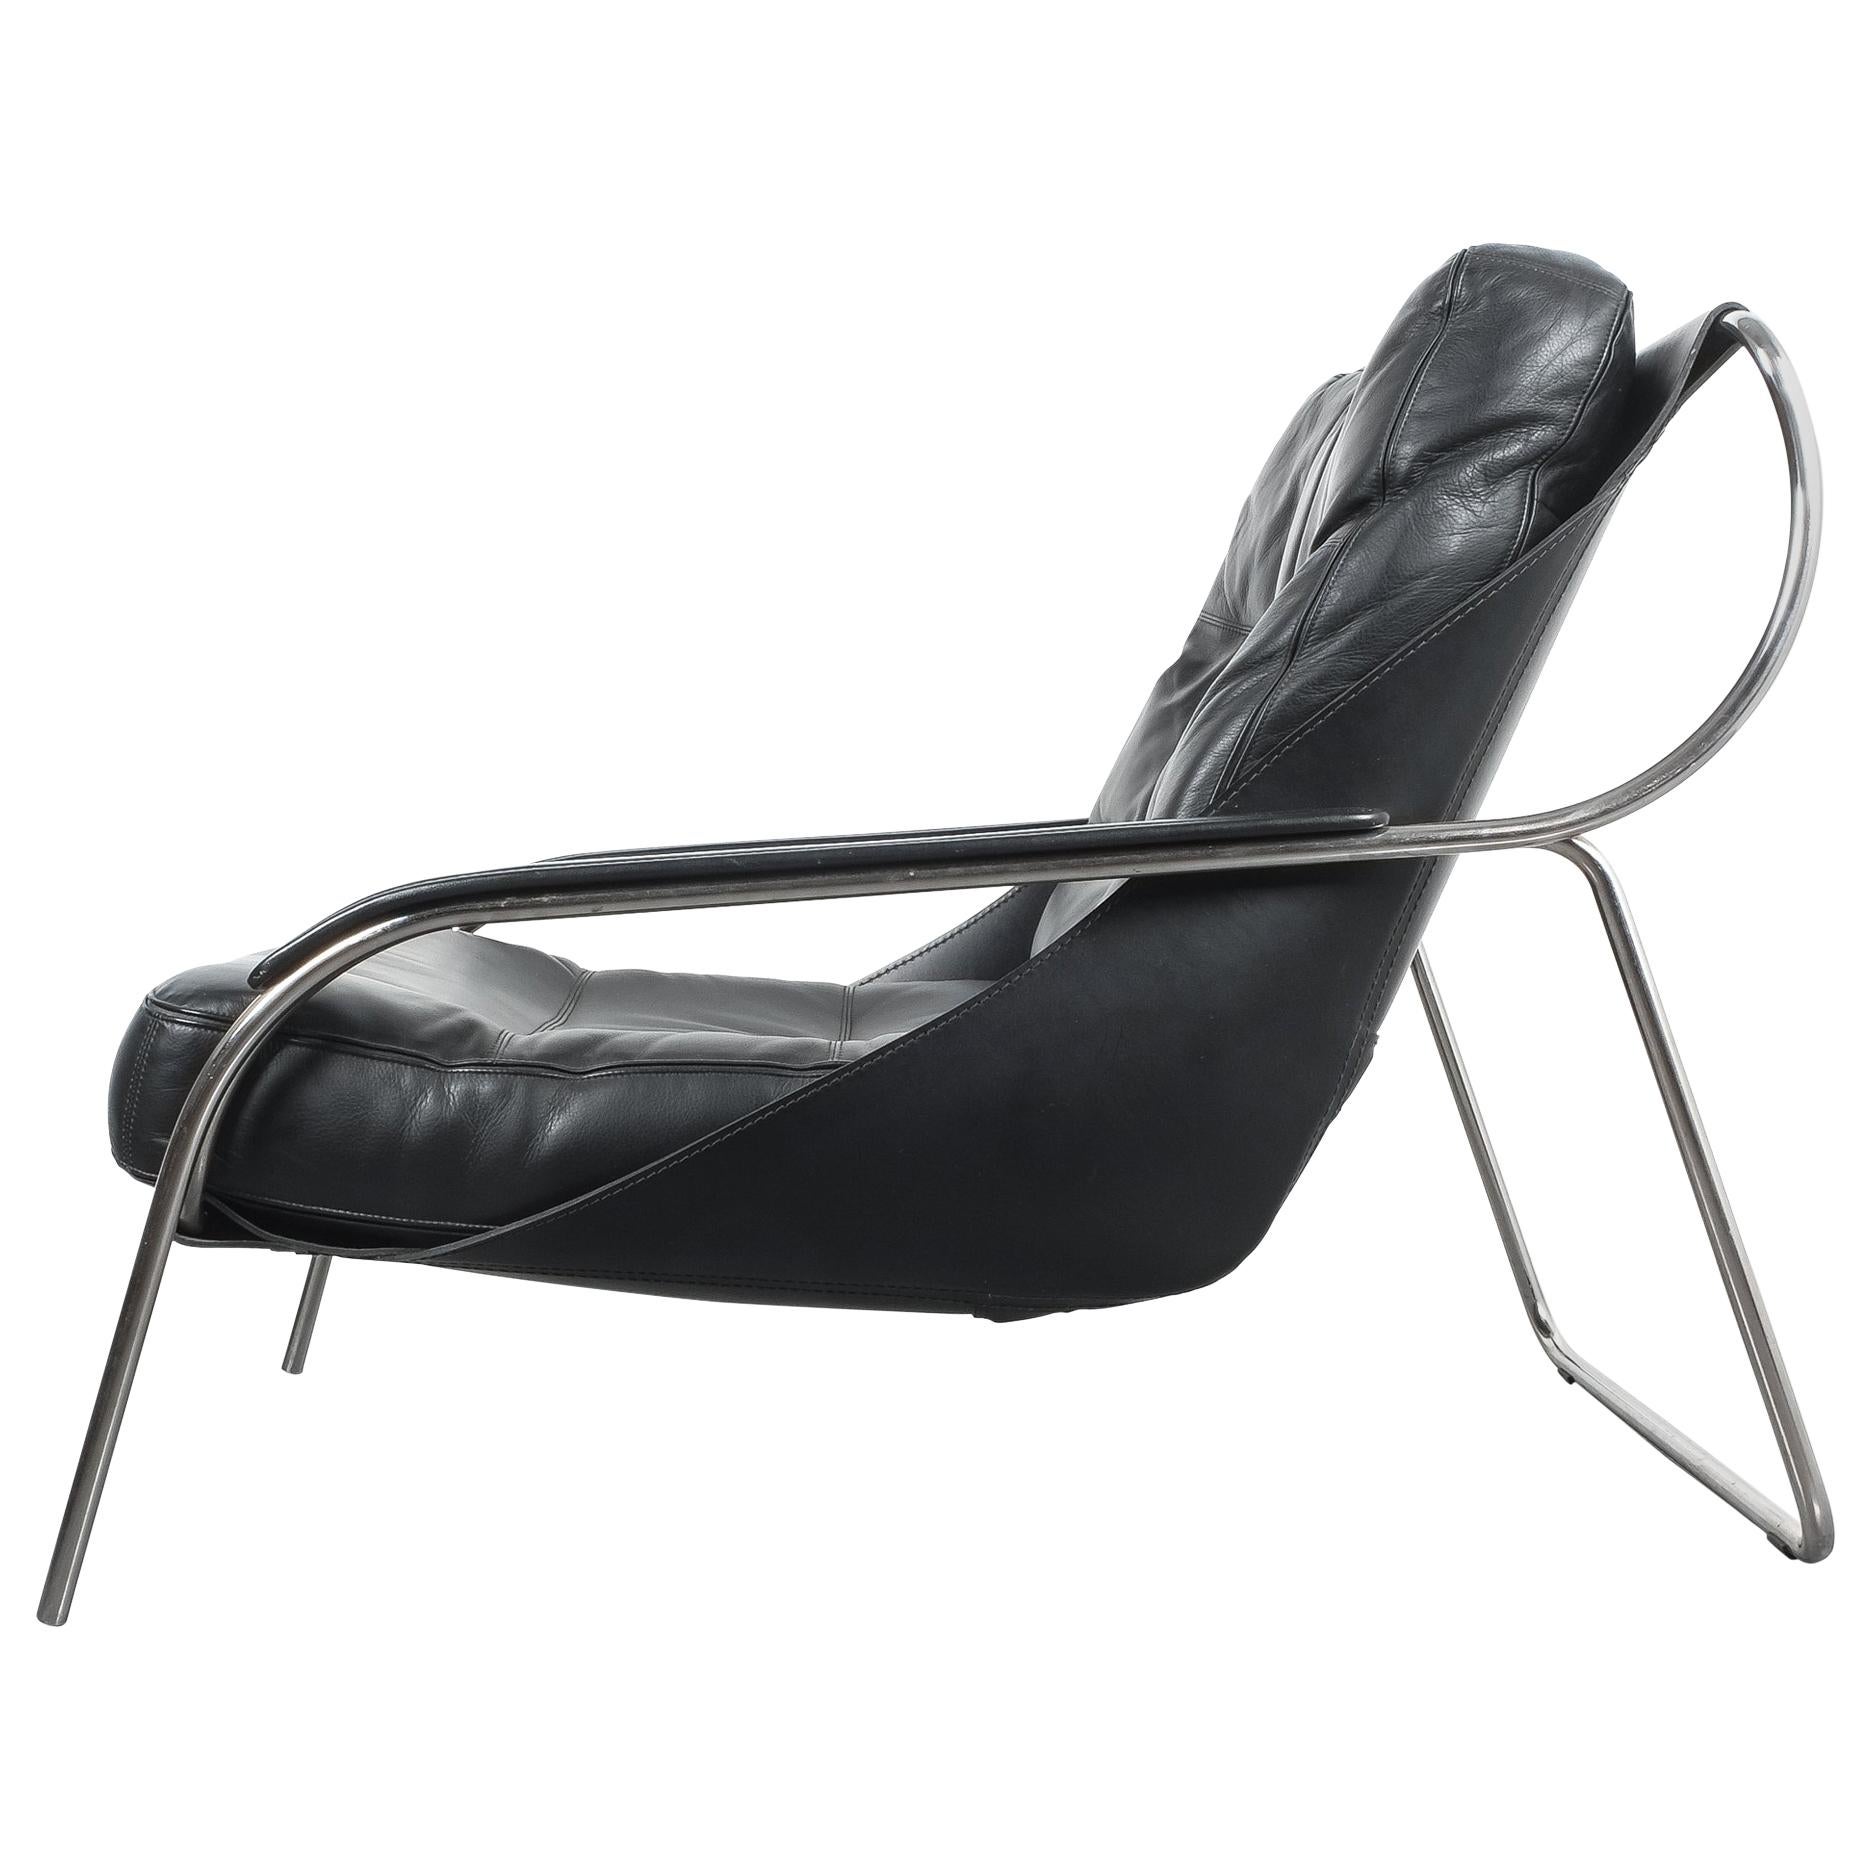 Marco Zanuso Maggiolina Sling Black Leather Chair by Zanotta, 1947